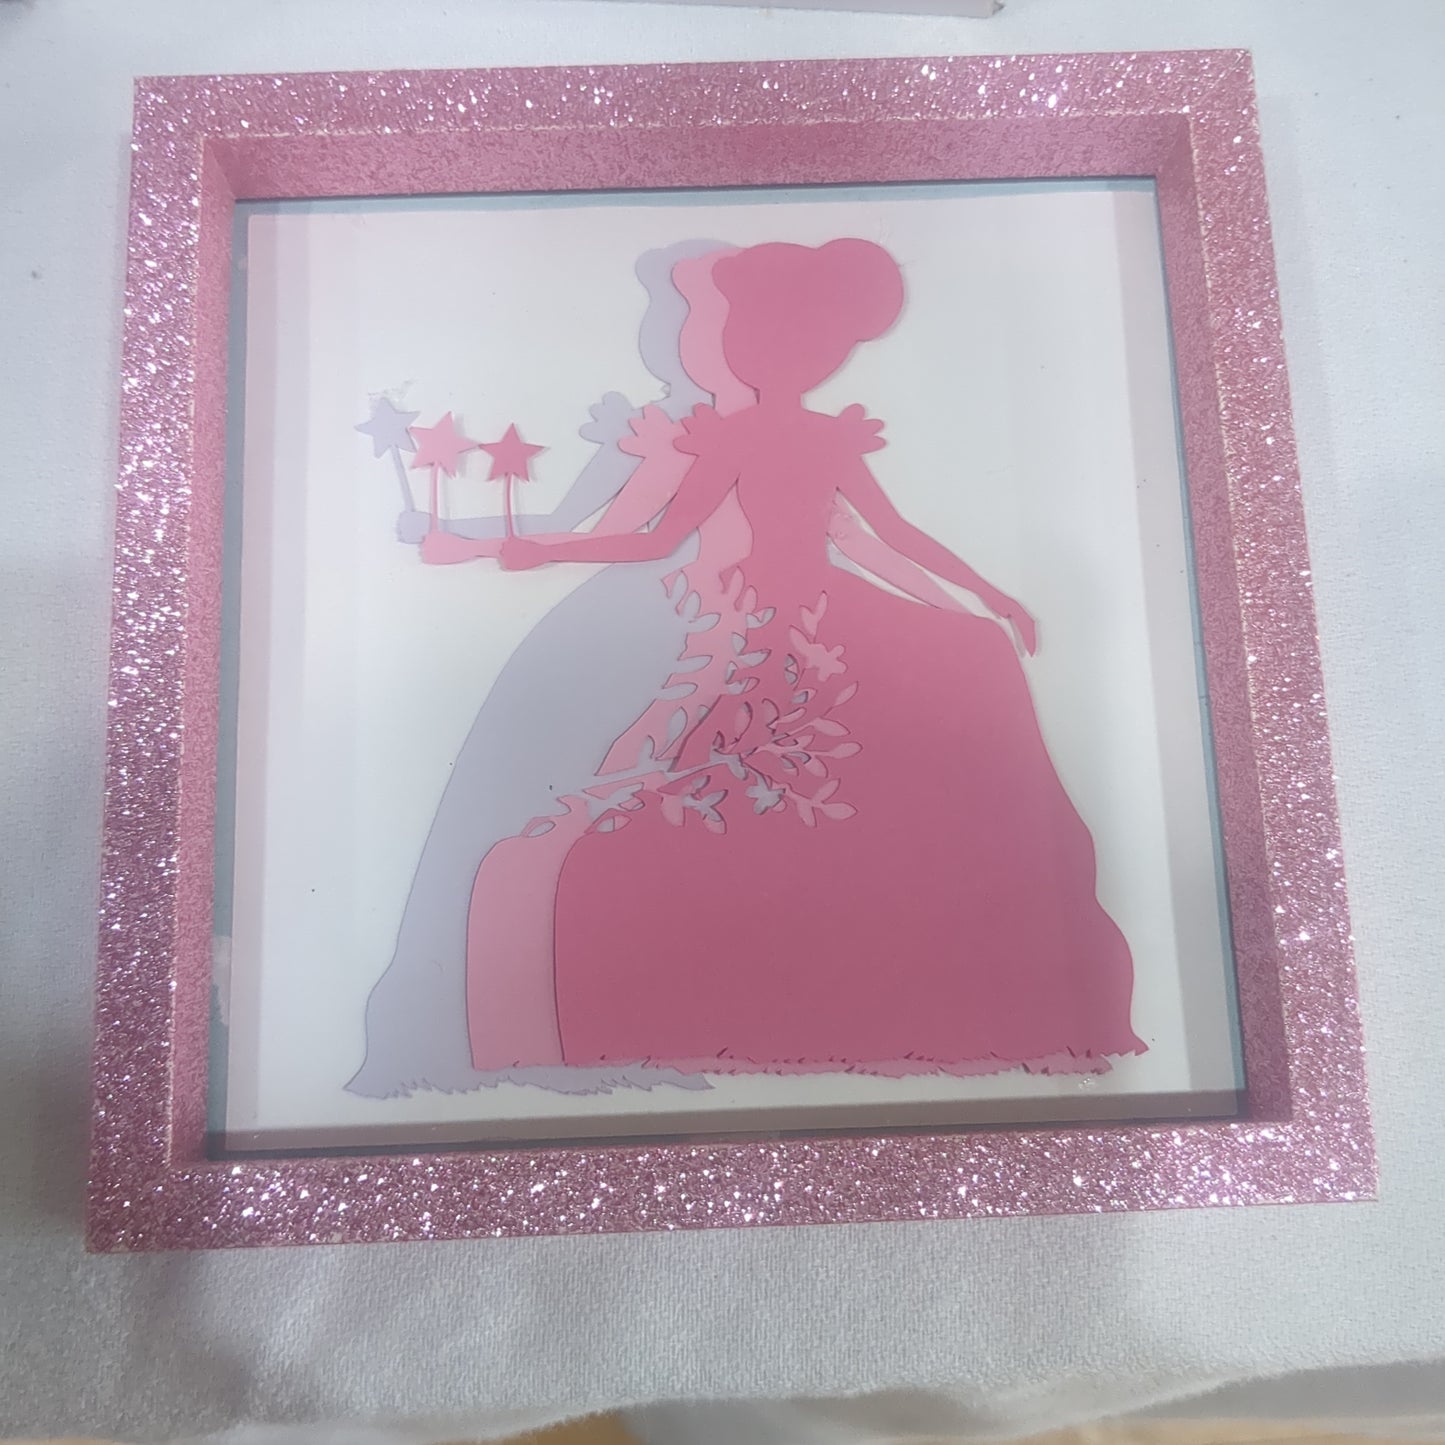 5 1/2 x 5 1/2” pink shadowbox with paper cut princess